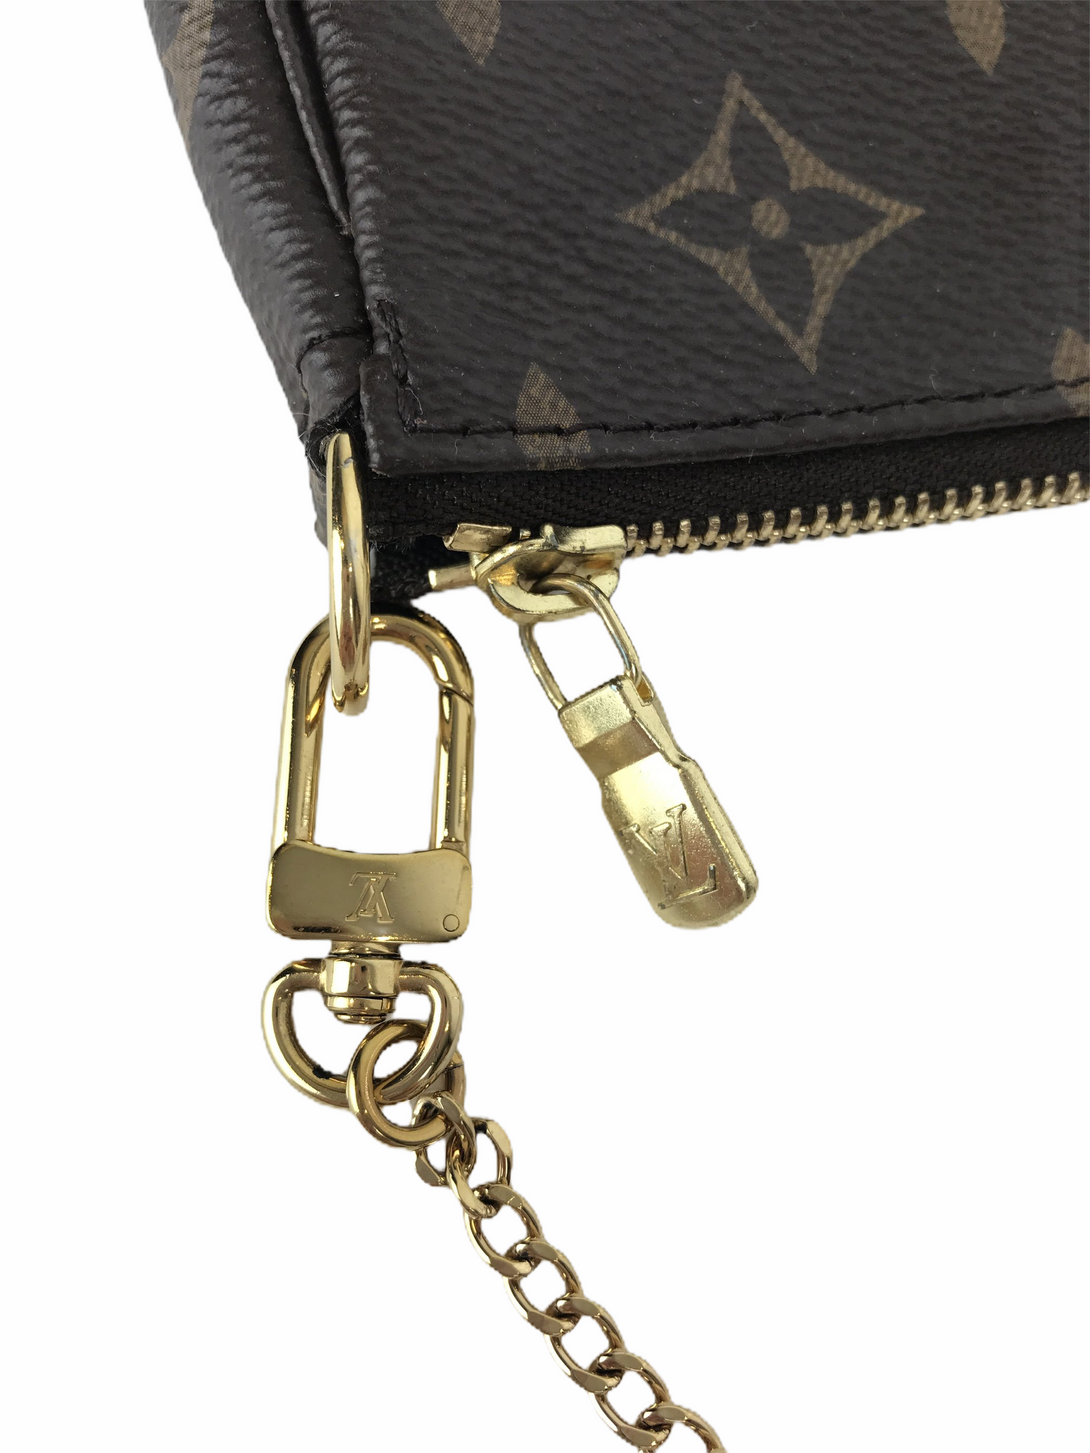 Louis Vuitton Mini Pochette - As seen on Instagram - Siopaella Designer Exchange